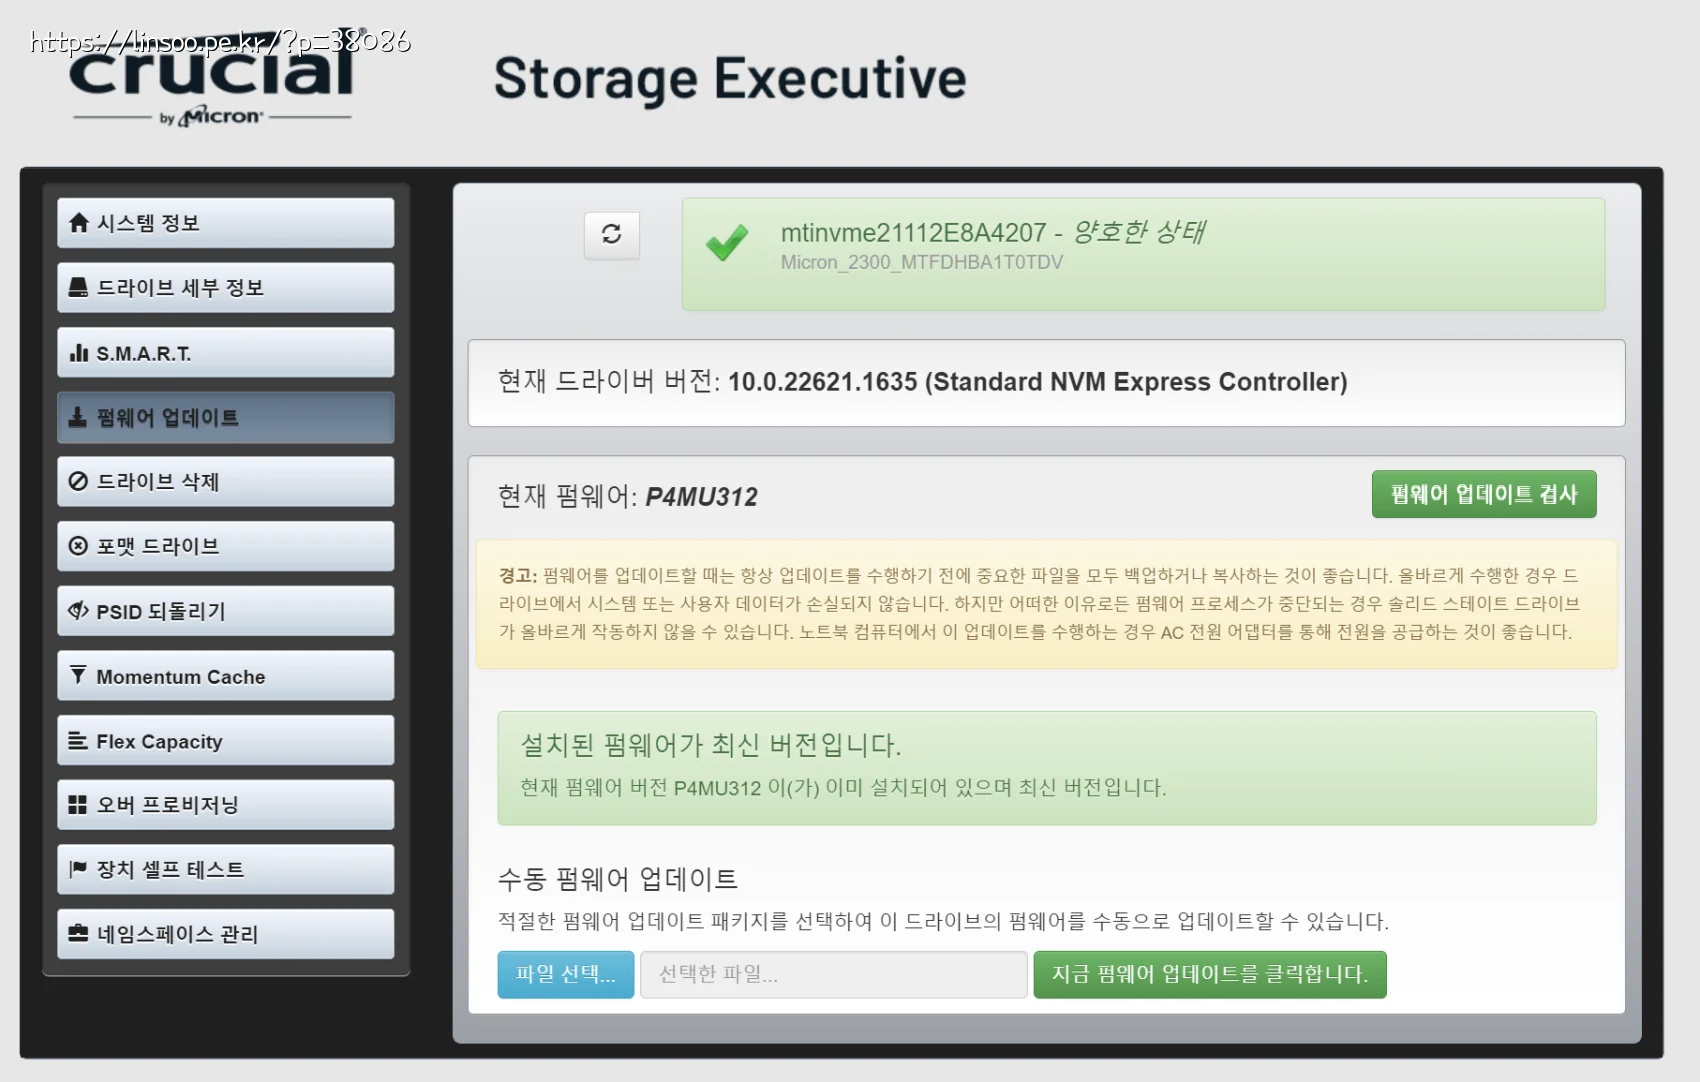 Crucial Storage Executive 펌웨어 업데이트 화면